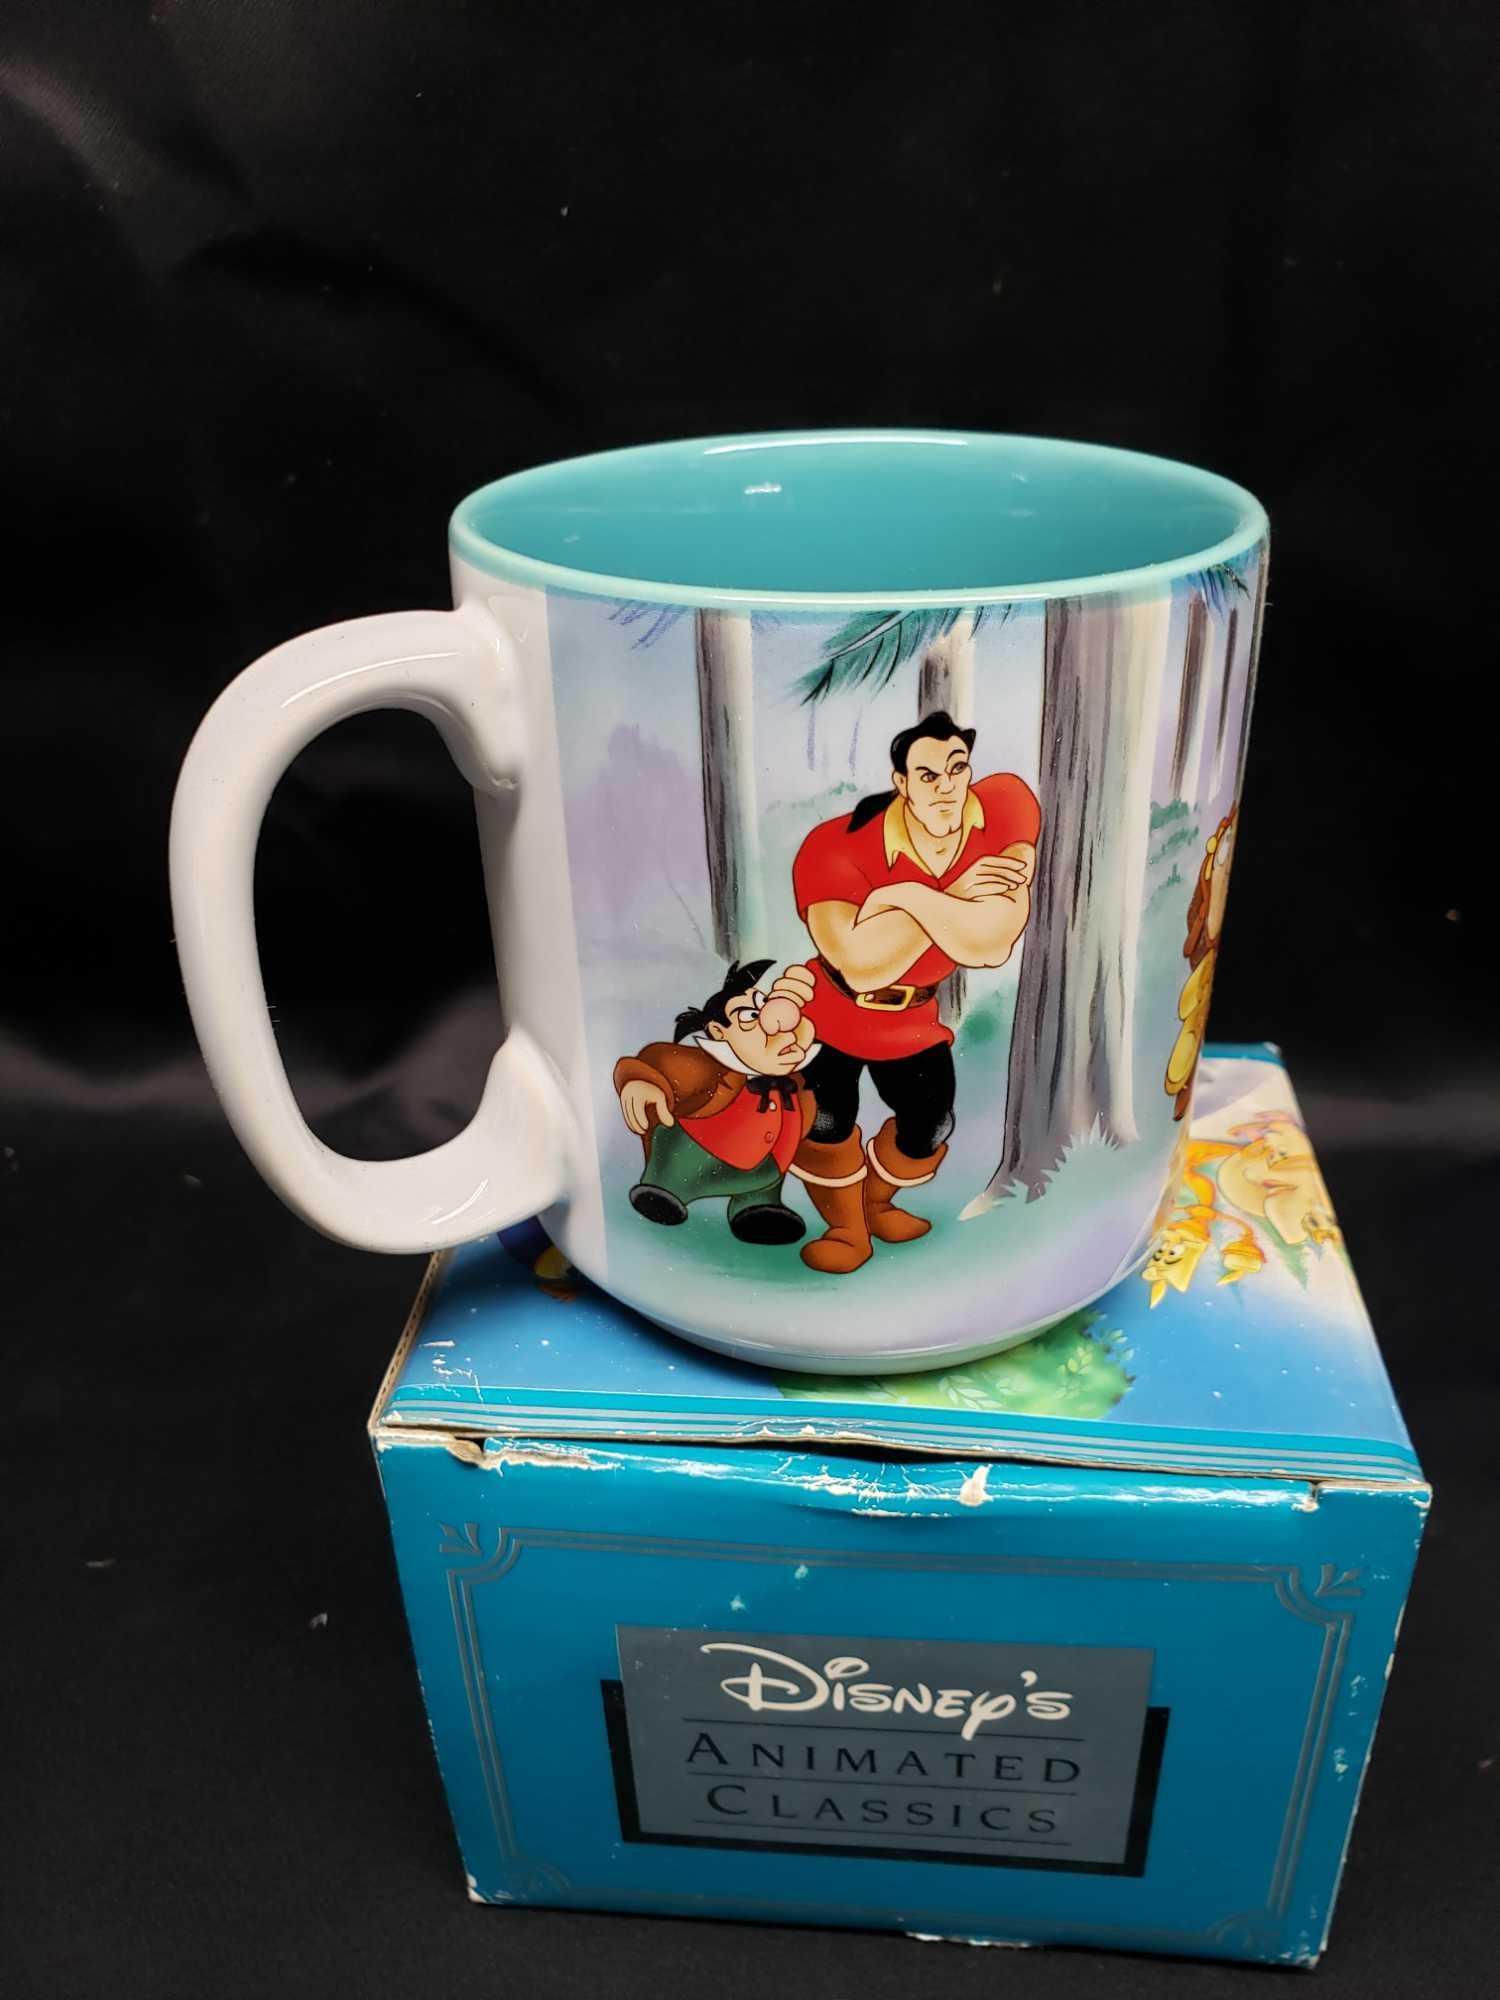 Disneys Animated Classics 1991 Beauty and the Beast coffee mug.